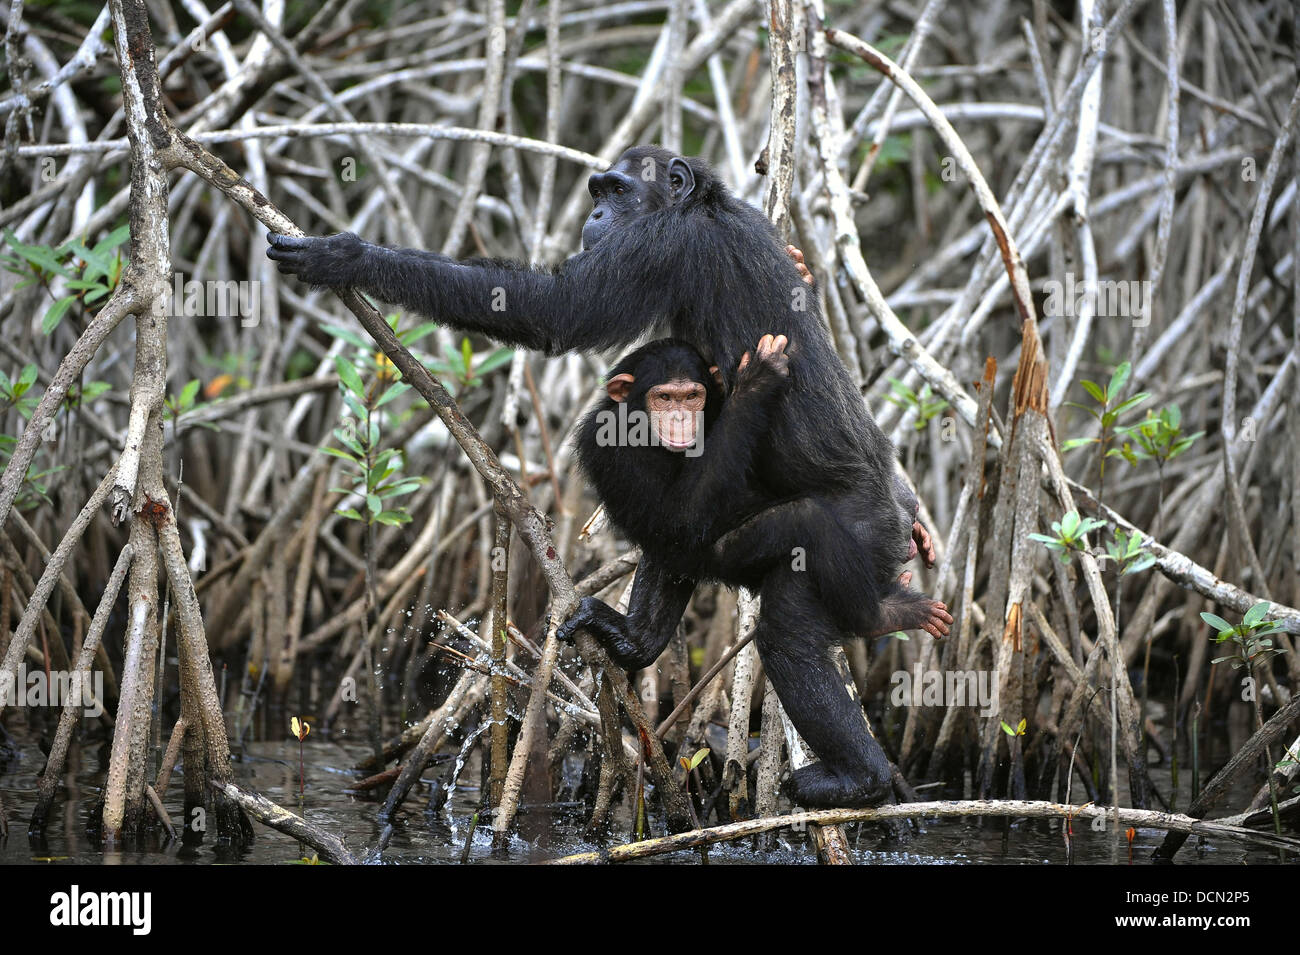 Uno scimpanzé con un cucciolo. Foto Stock